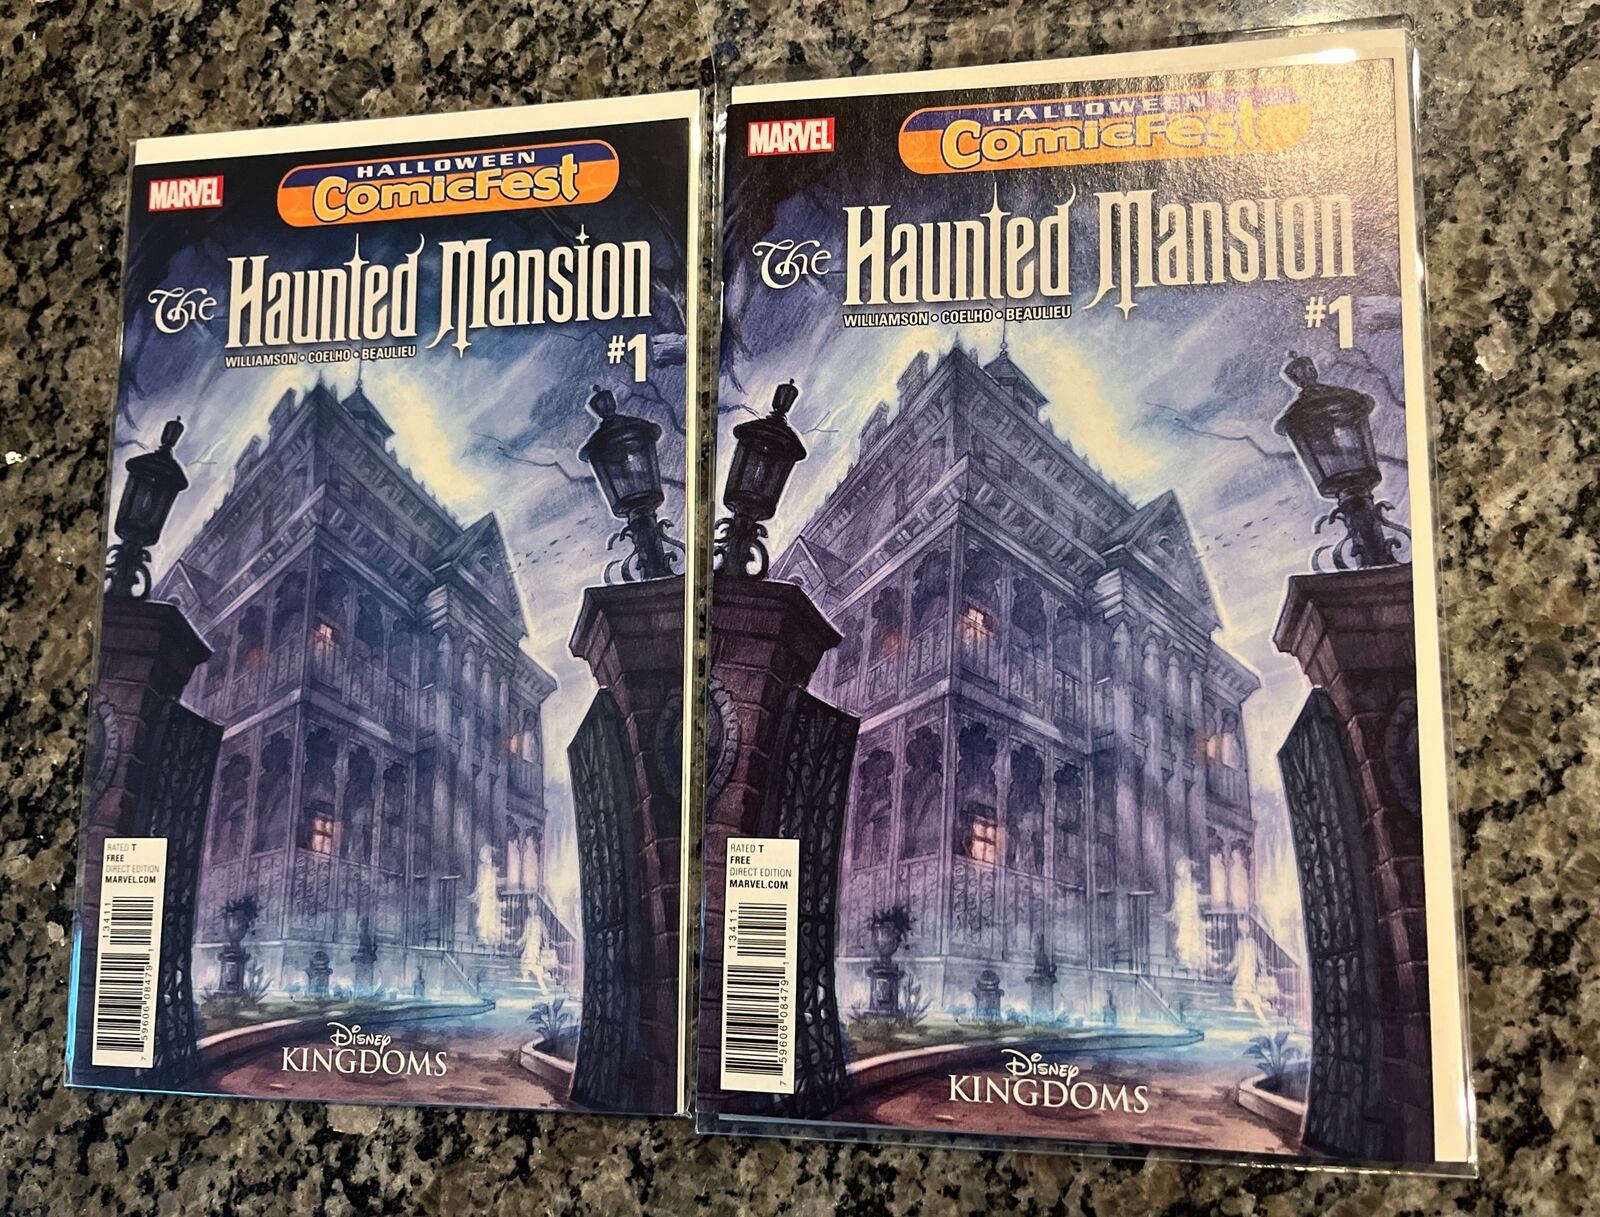 Disney The Haunted Mansion #1 Halloween Comicfest Marvel Comics (x2)